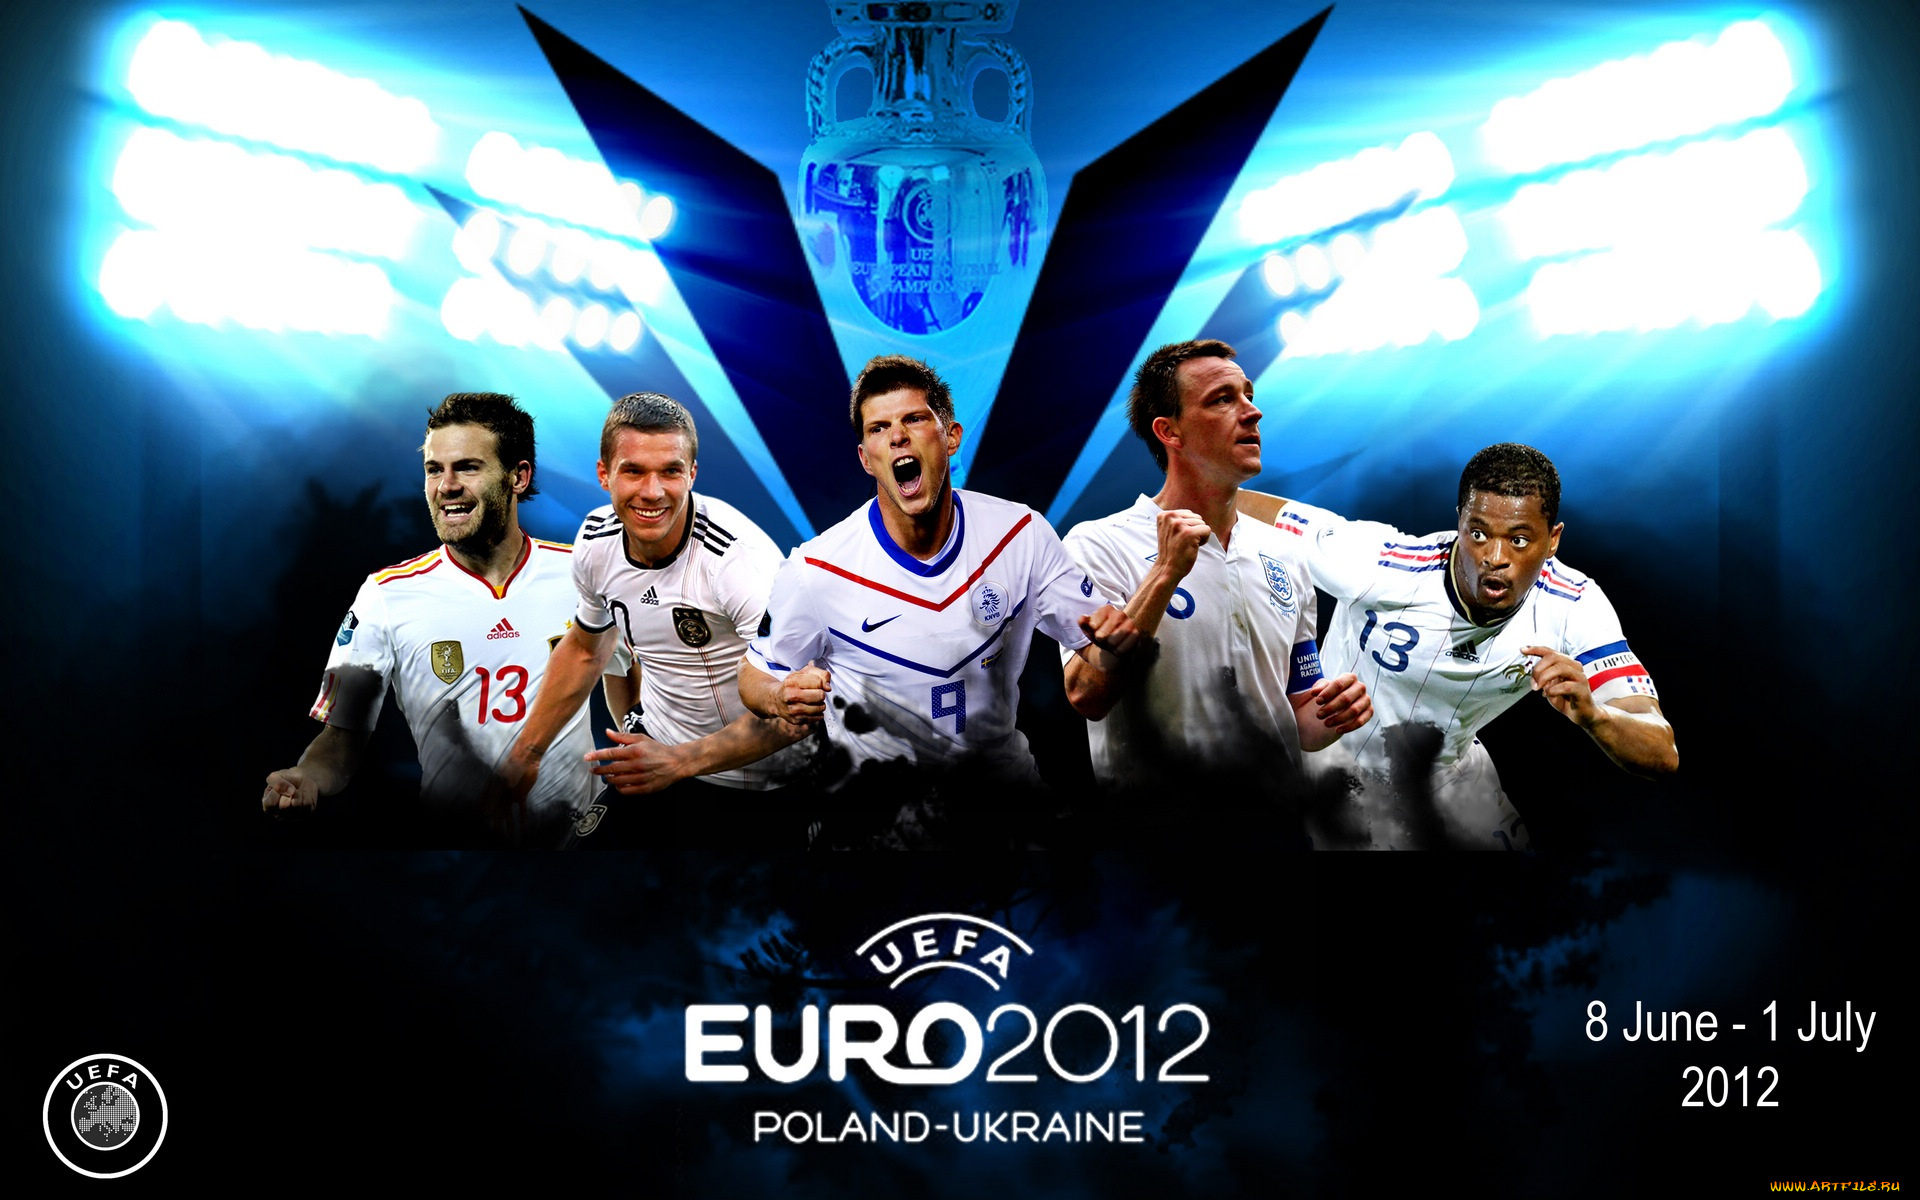 Poland-Ukraine uefa euro 2012 скачать